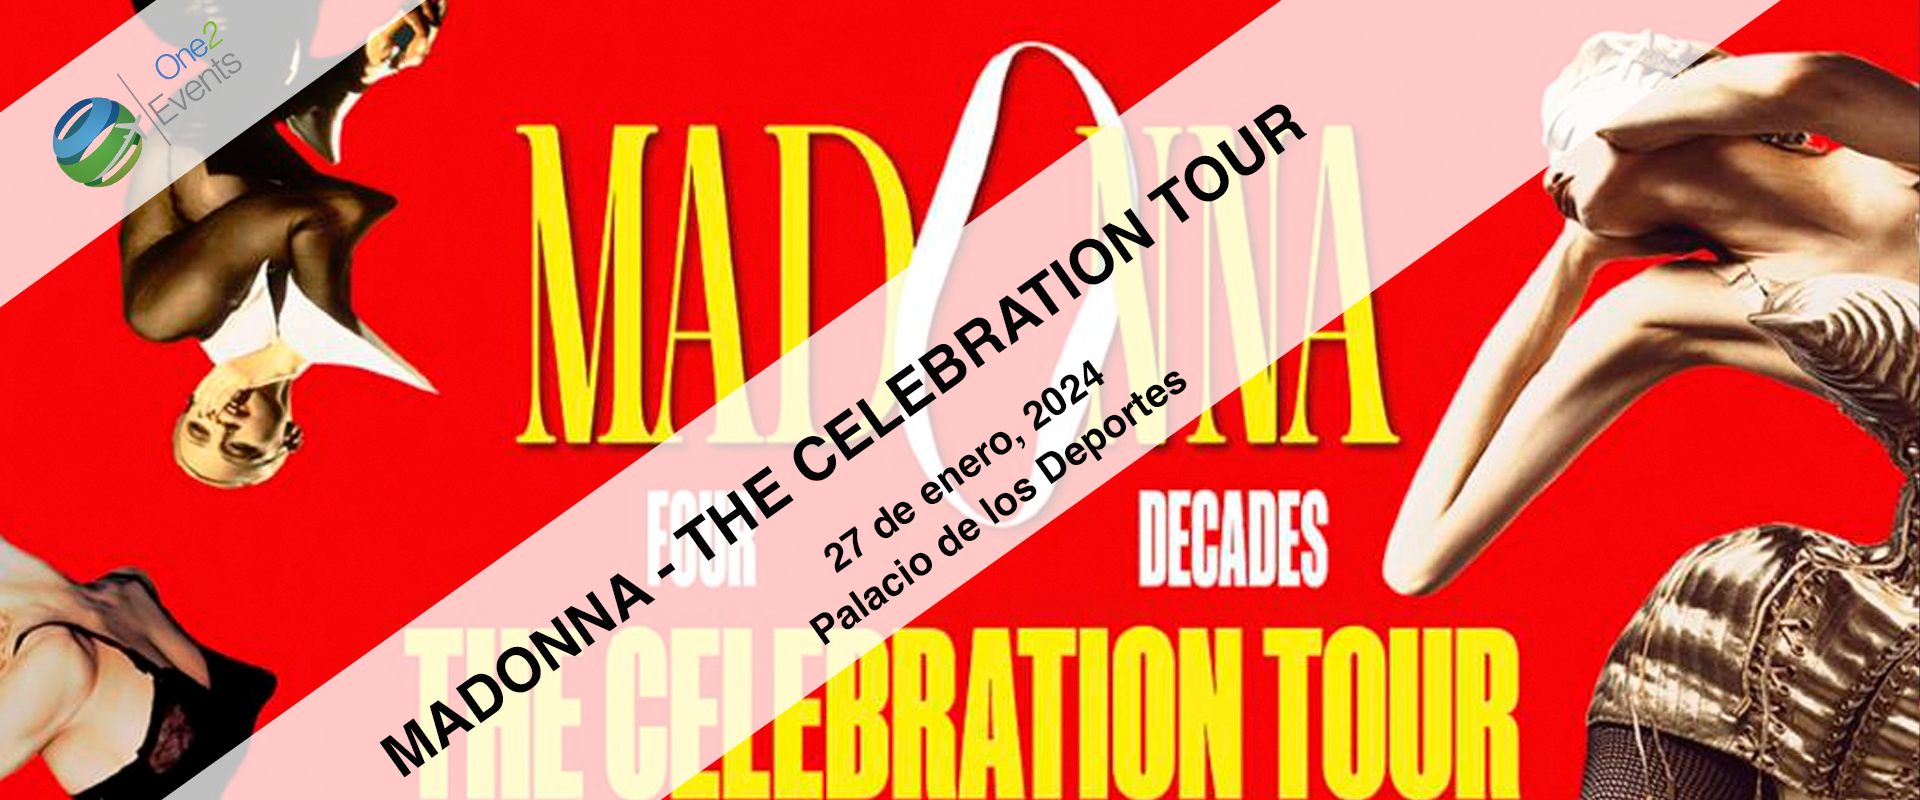 MADONNA - THE CELEBRATION TOUR